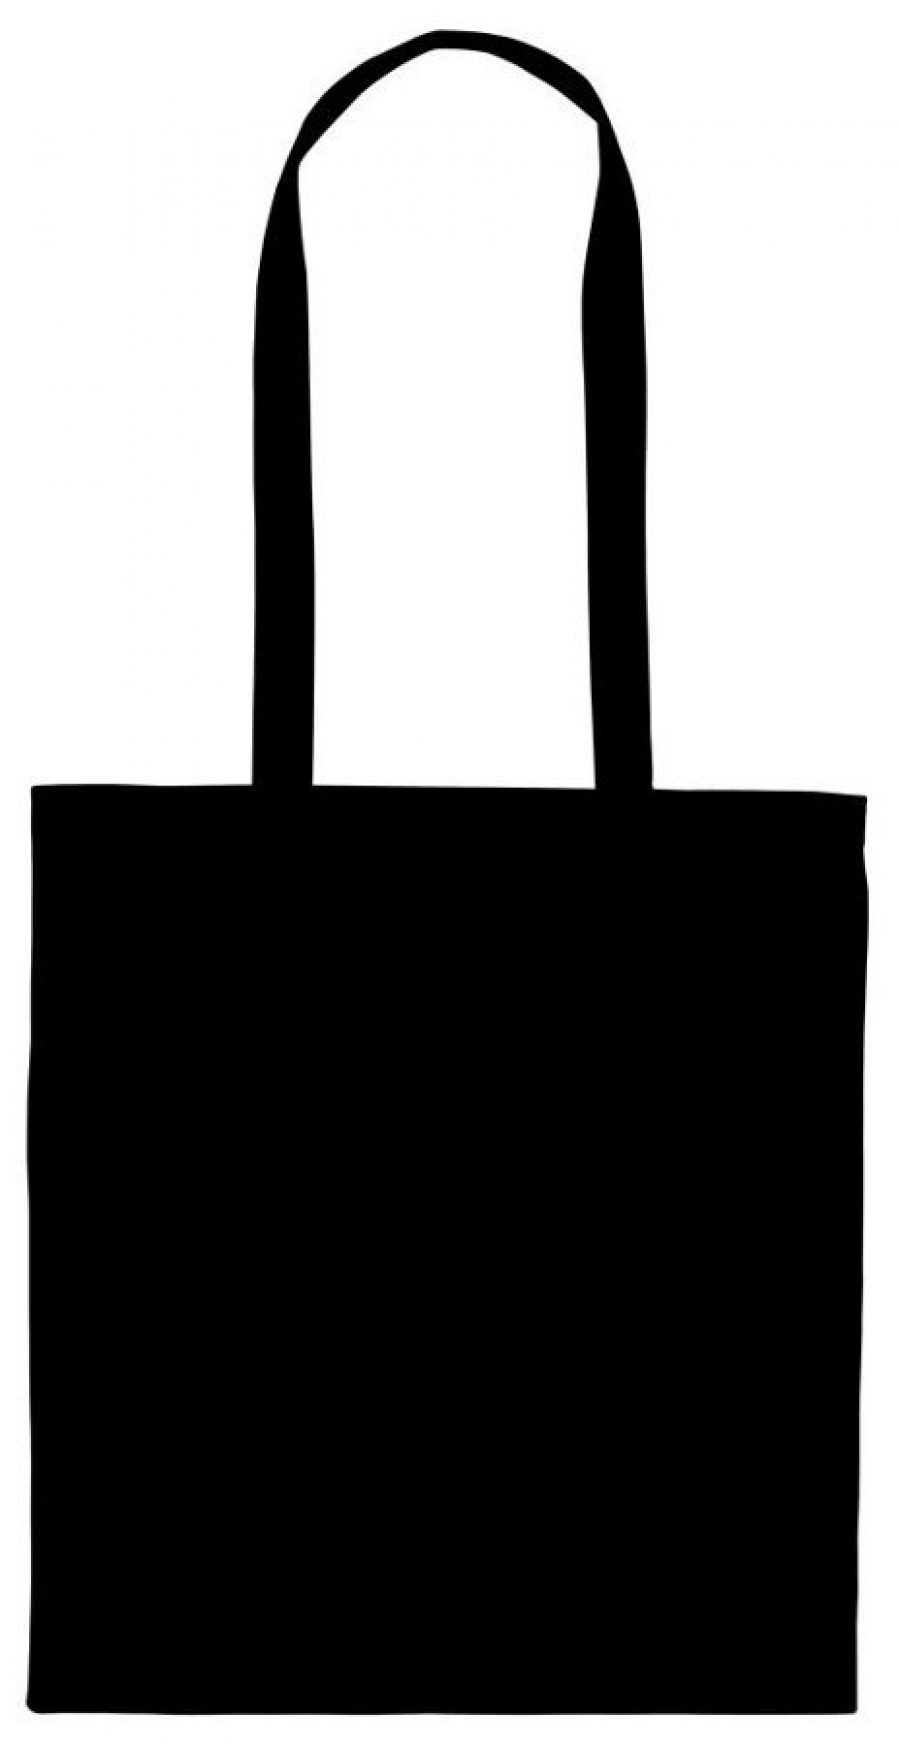 Calico Bag - Long Handles